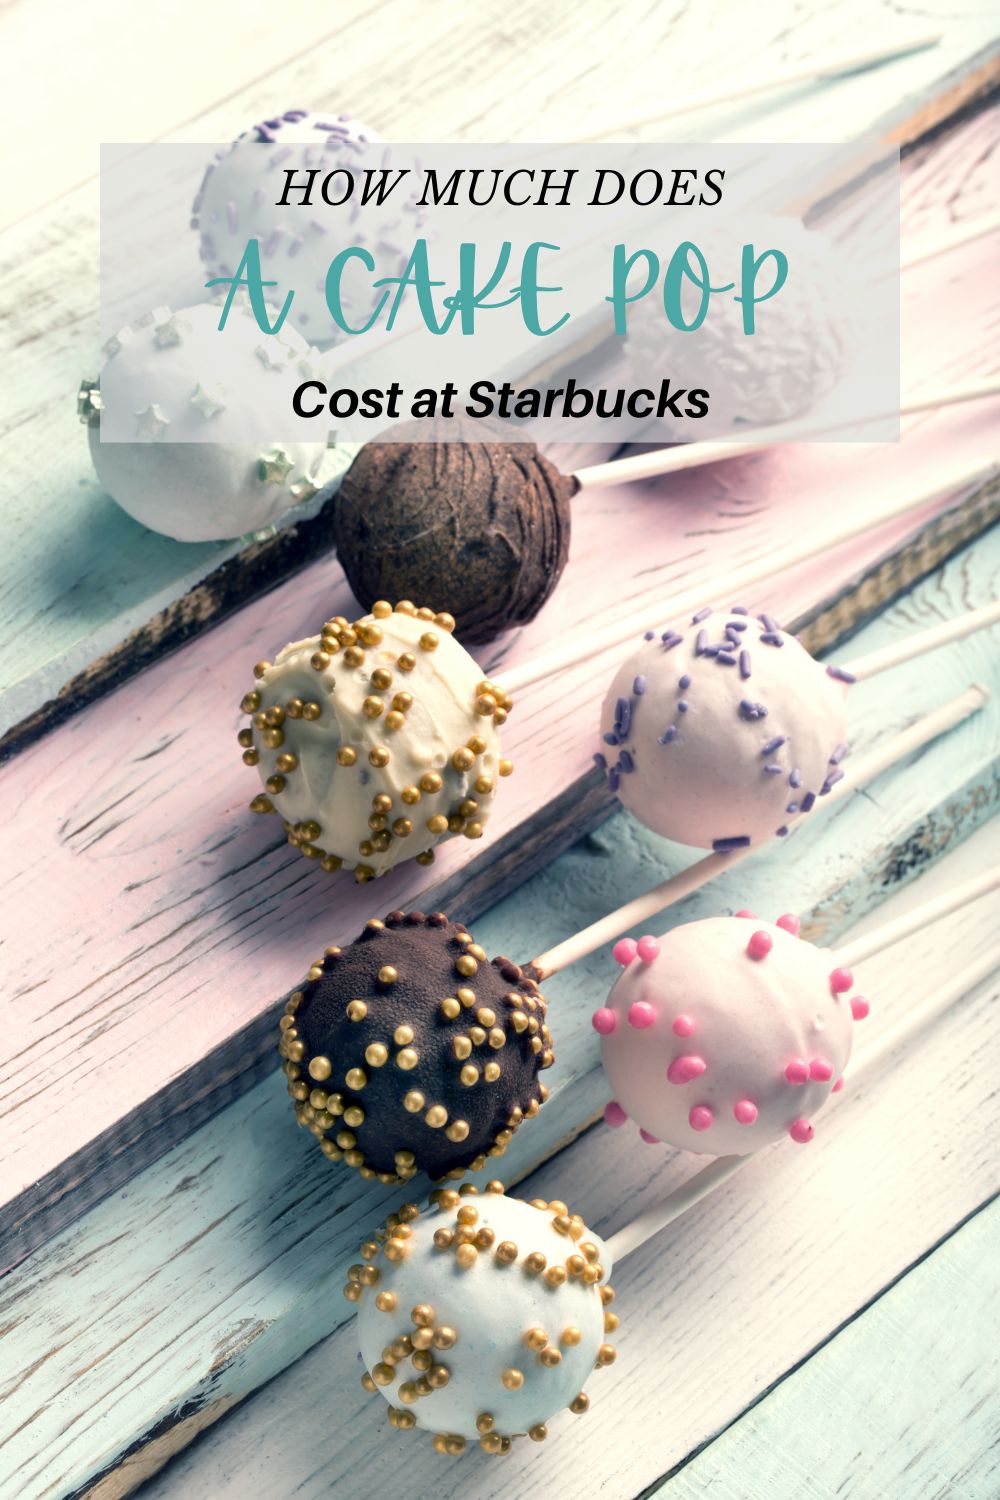 Cake Pop Cost at Starbucks